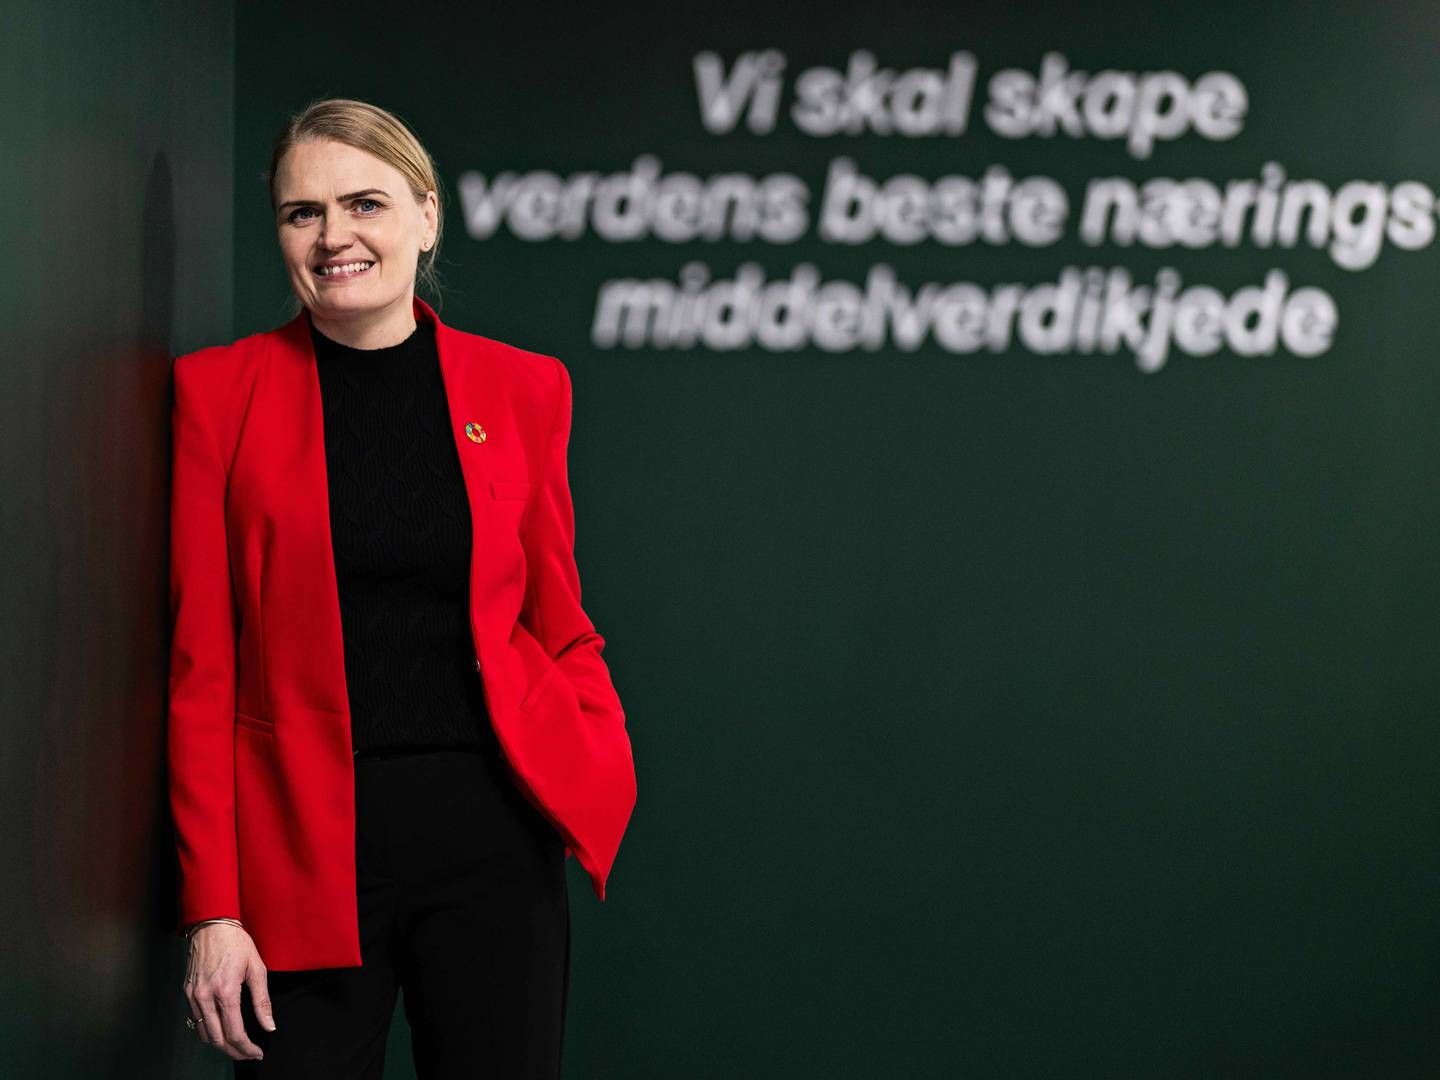 Med investeringene vi har gjort i nytt slakteri og rugeri er vi godt rigget for vekst, sier Hilde Talseth, administrerende direktør i Norsk Kylling | Foto: Elin Iversen